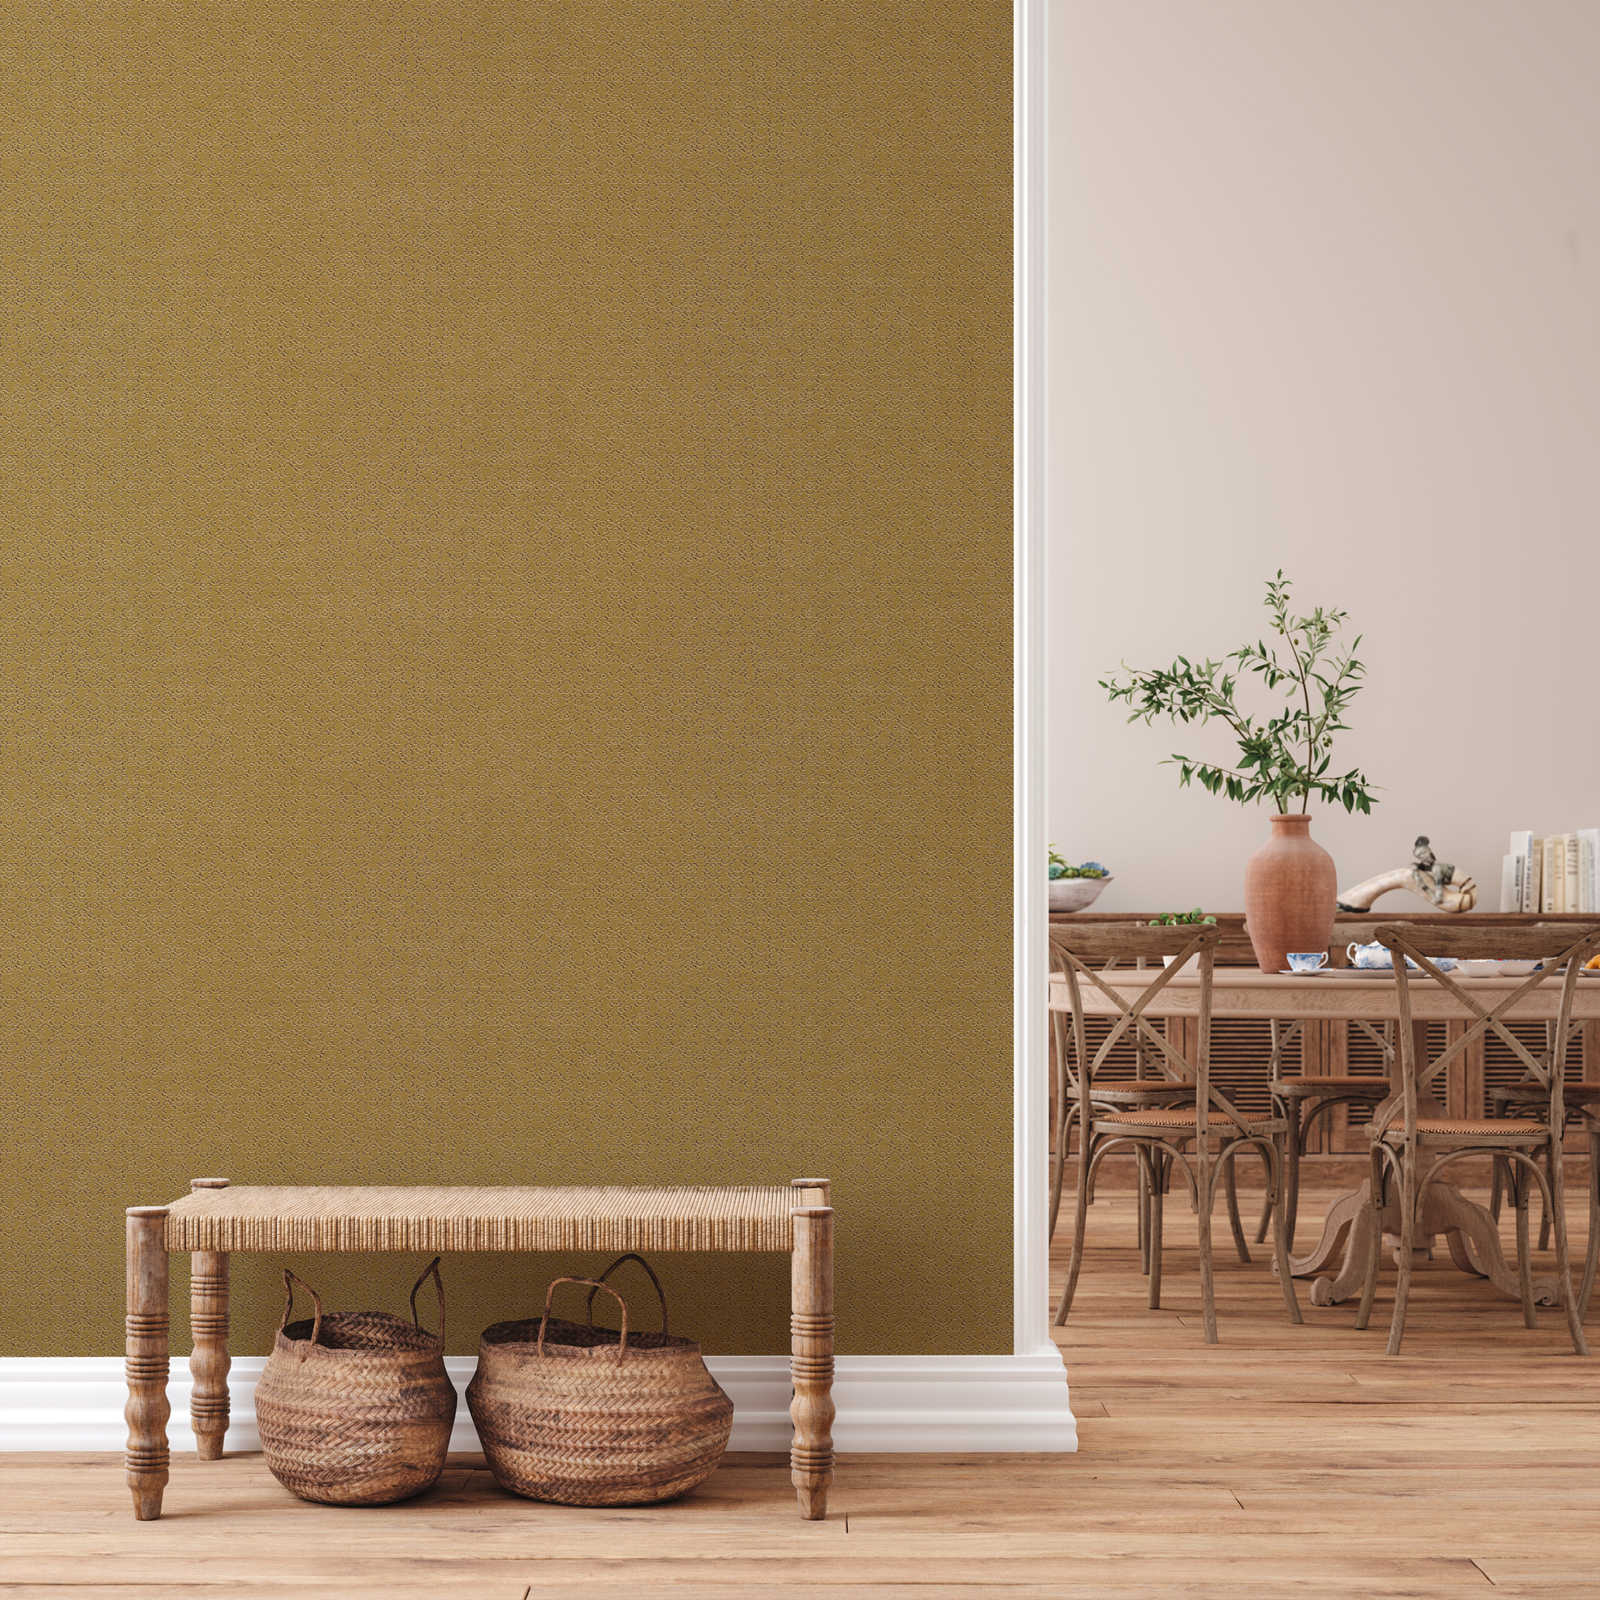             Golden pattern wallpaper with 3D effect & metallic luster - Brown, Yellow, Metallic
        